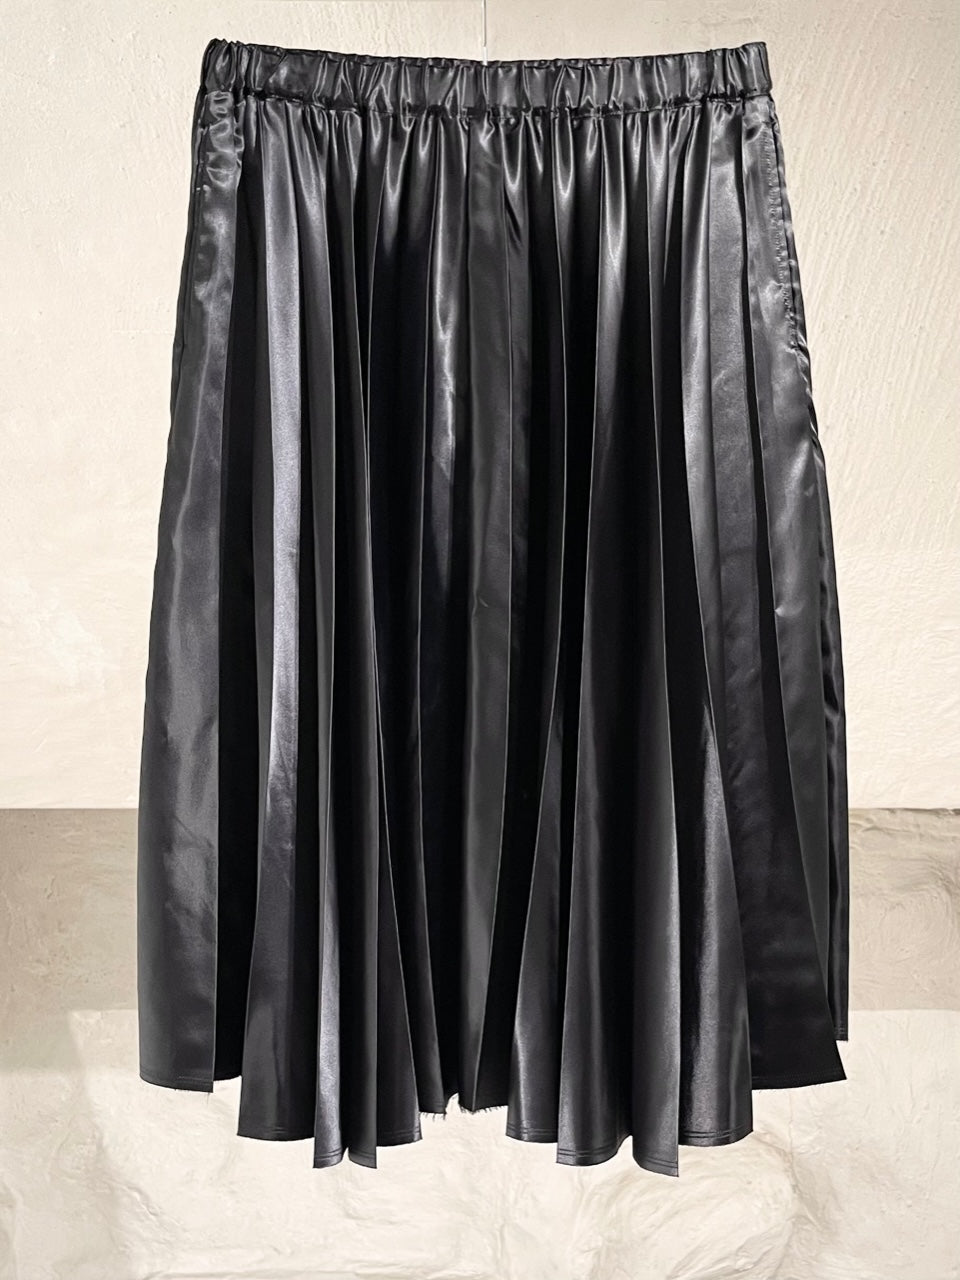 Comme des Garçons Suspender Skirt, Satin Effect Black